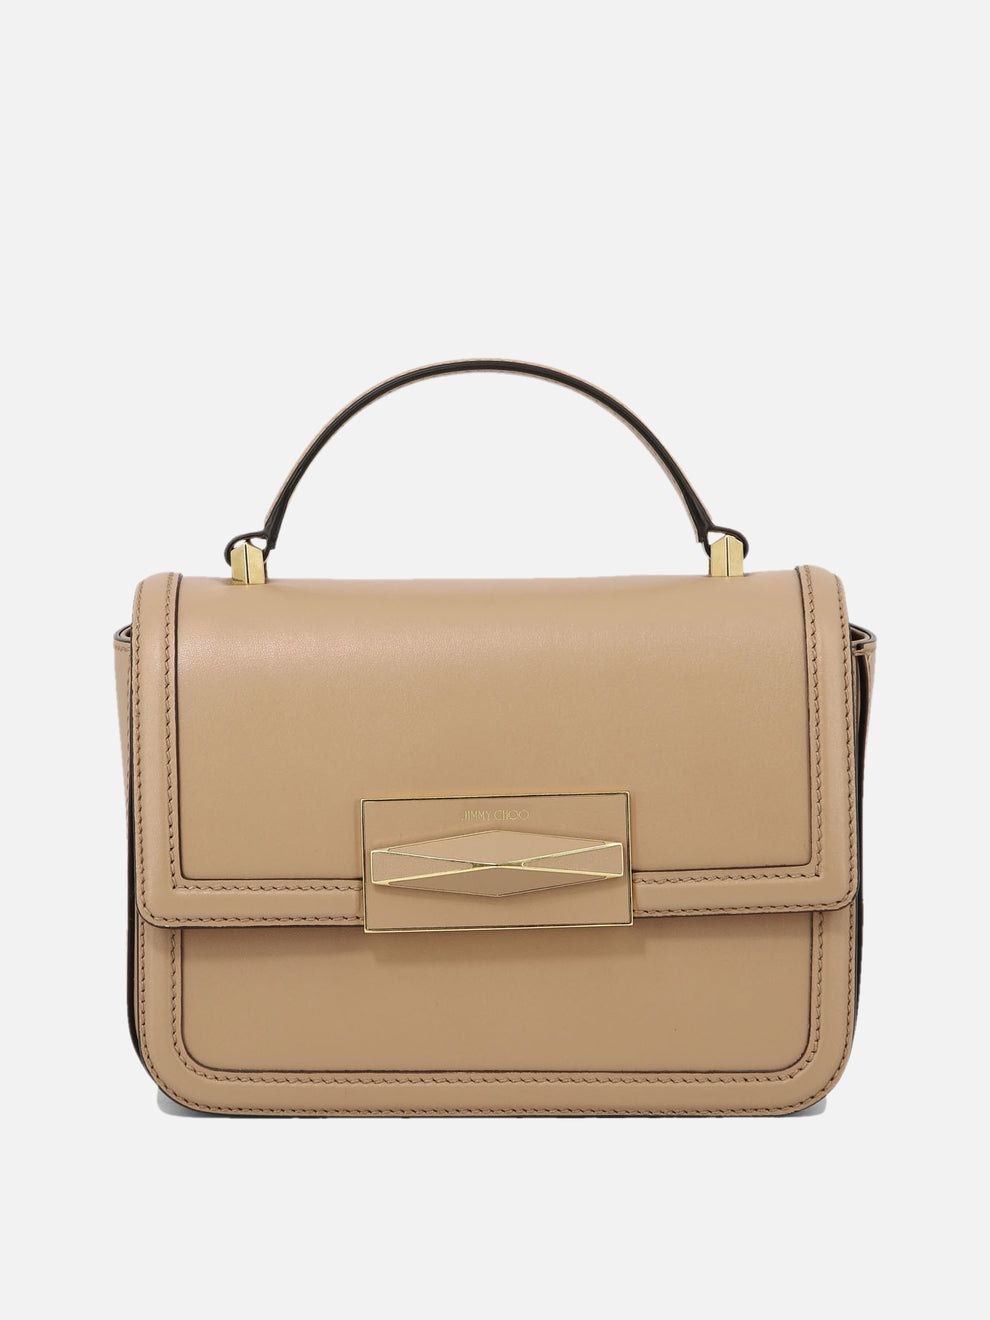 JIMMY CHOO Tan Leather Handbag with Diamond Clasp and Adjustable Strap